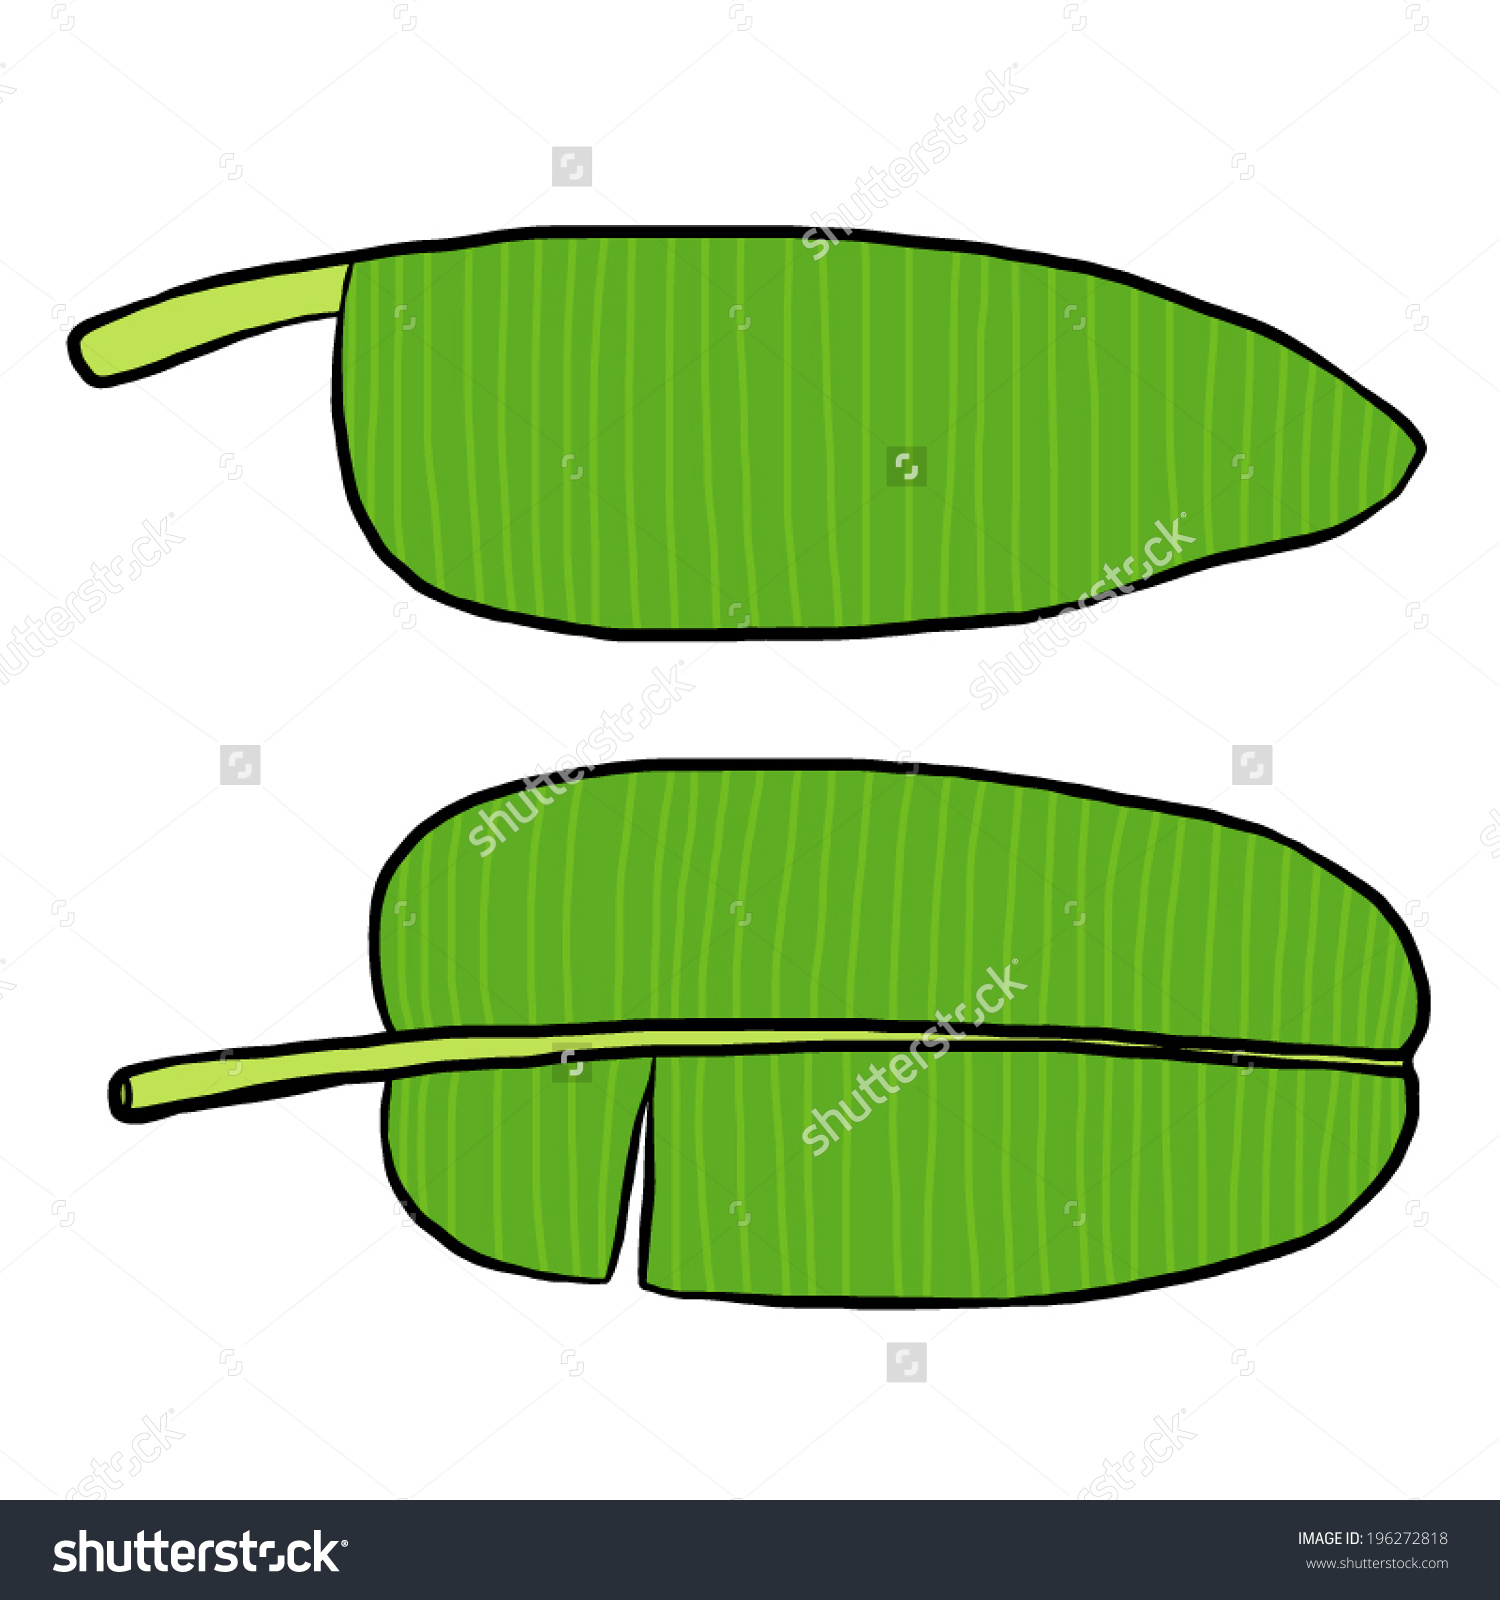 clip art banana leaf - photo #25